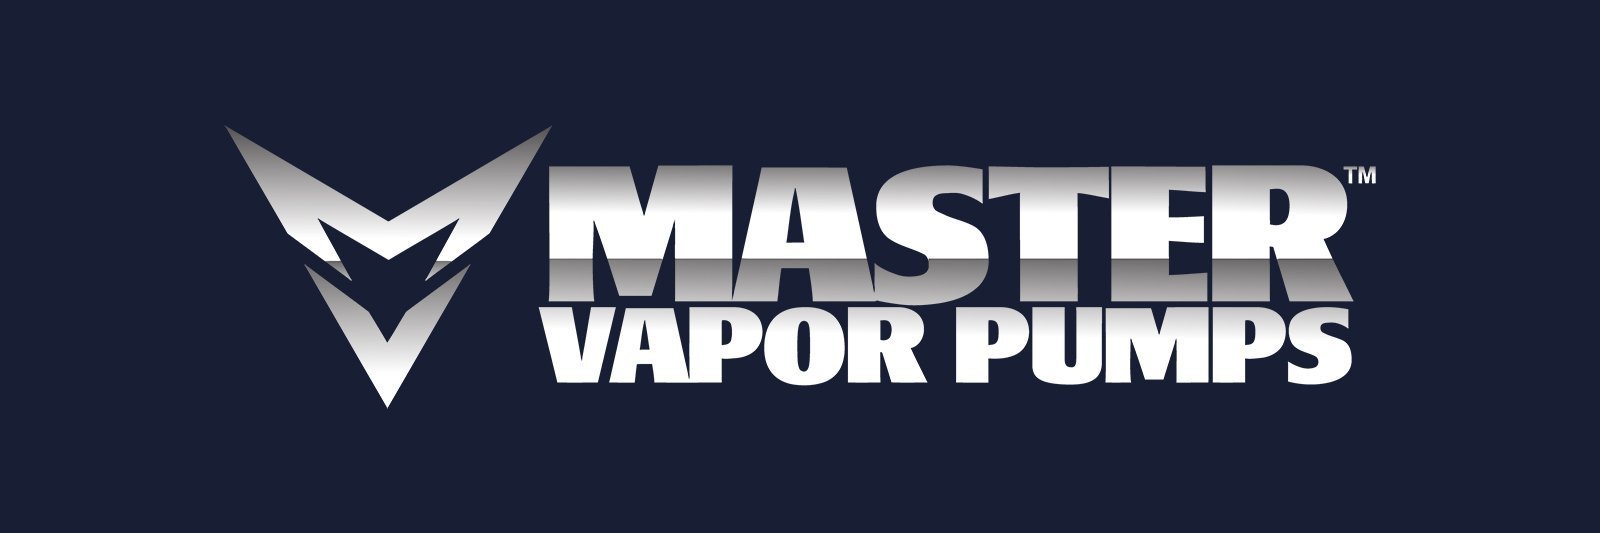 Master Vapor Pumps, Pump Part - MVP - 60 PSI, 150 PSI, & Liquid - Diaphragm Replacement